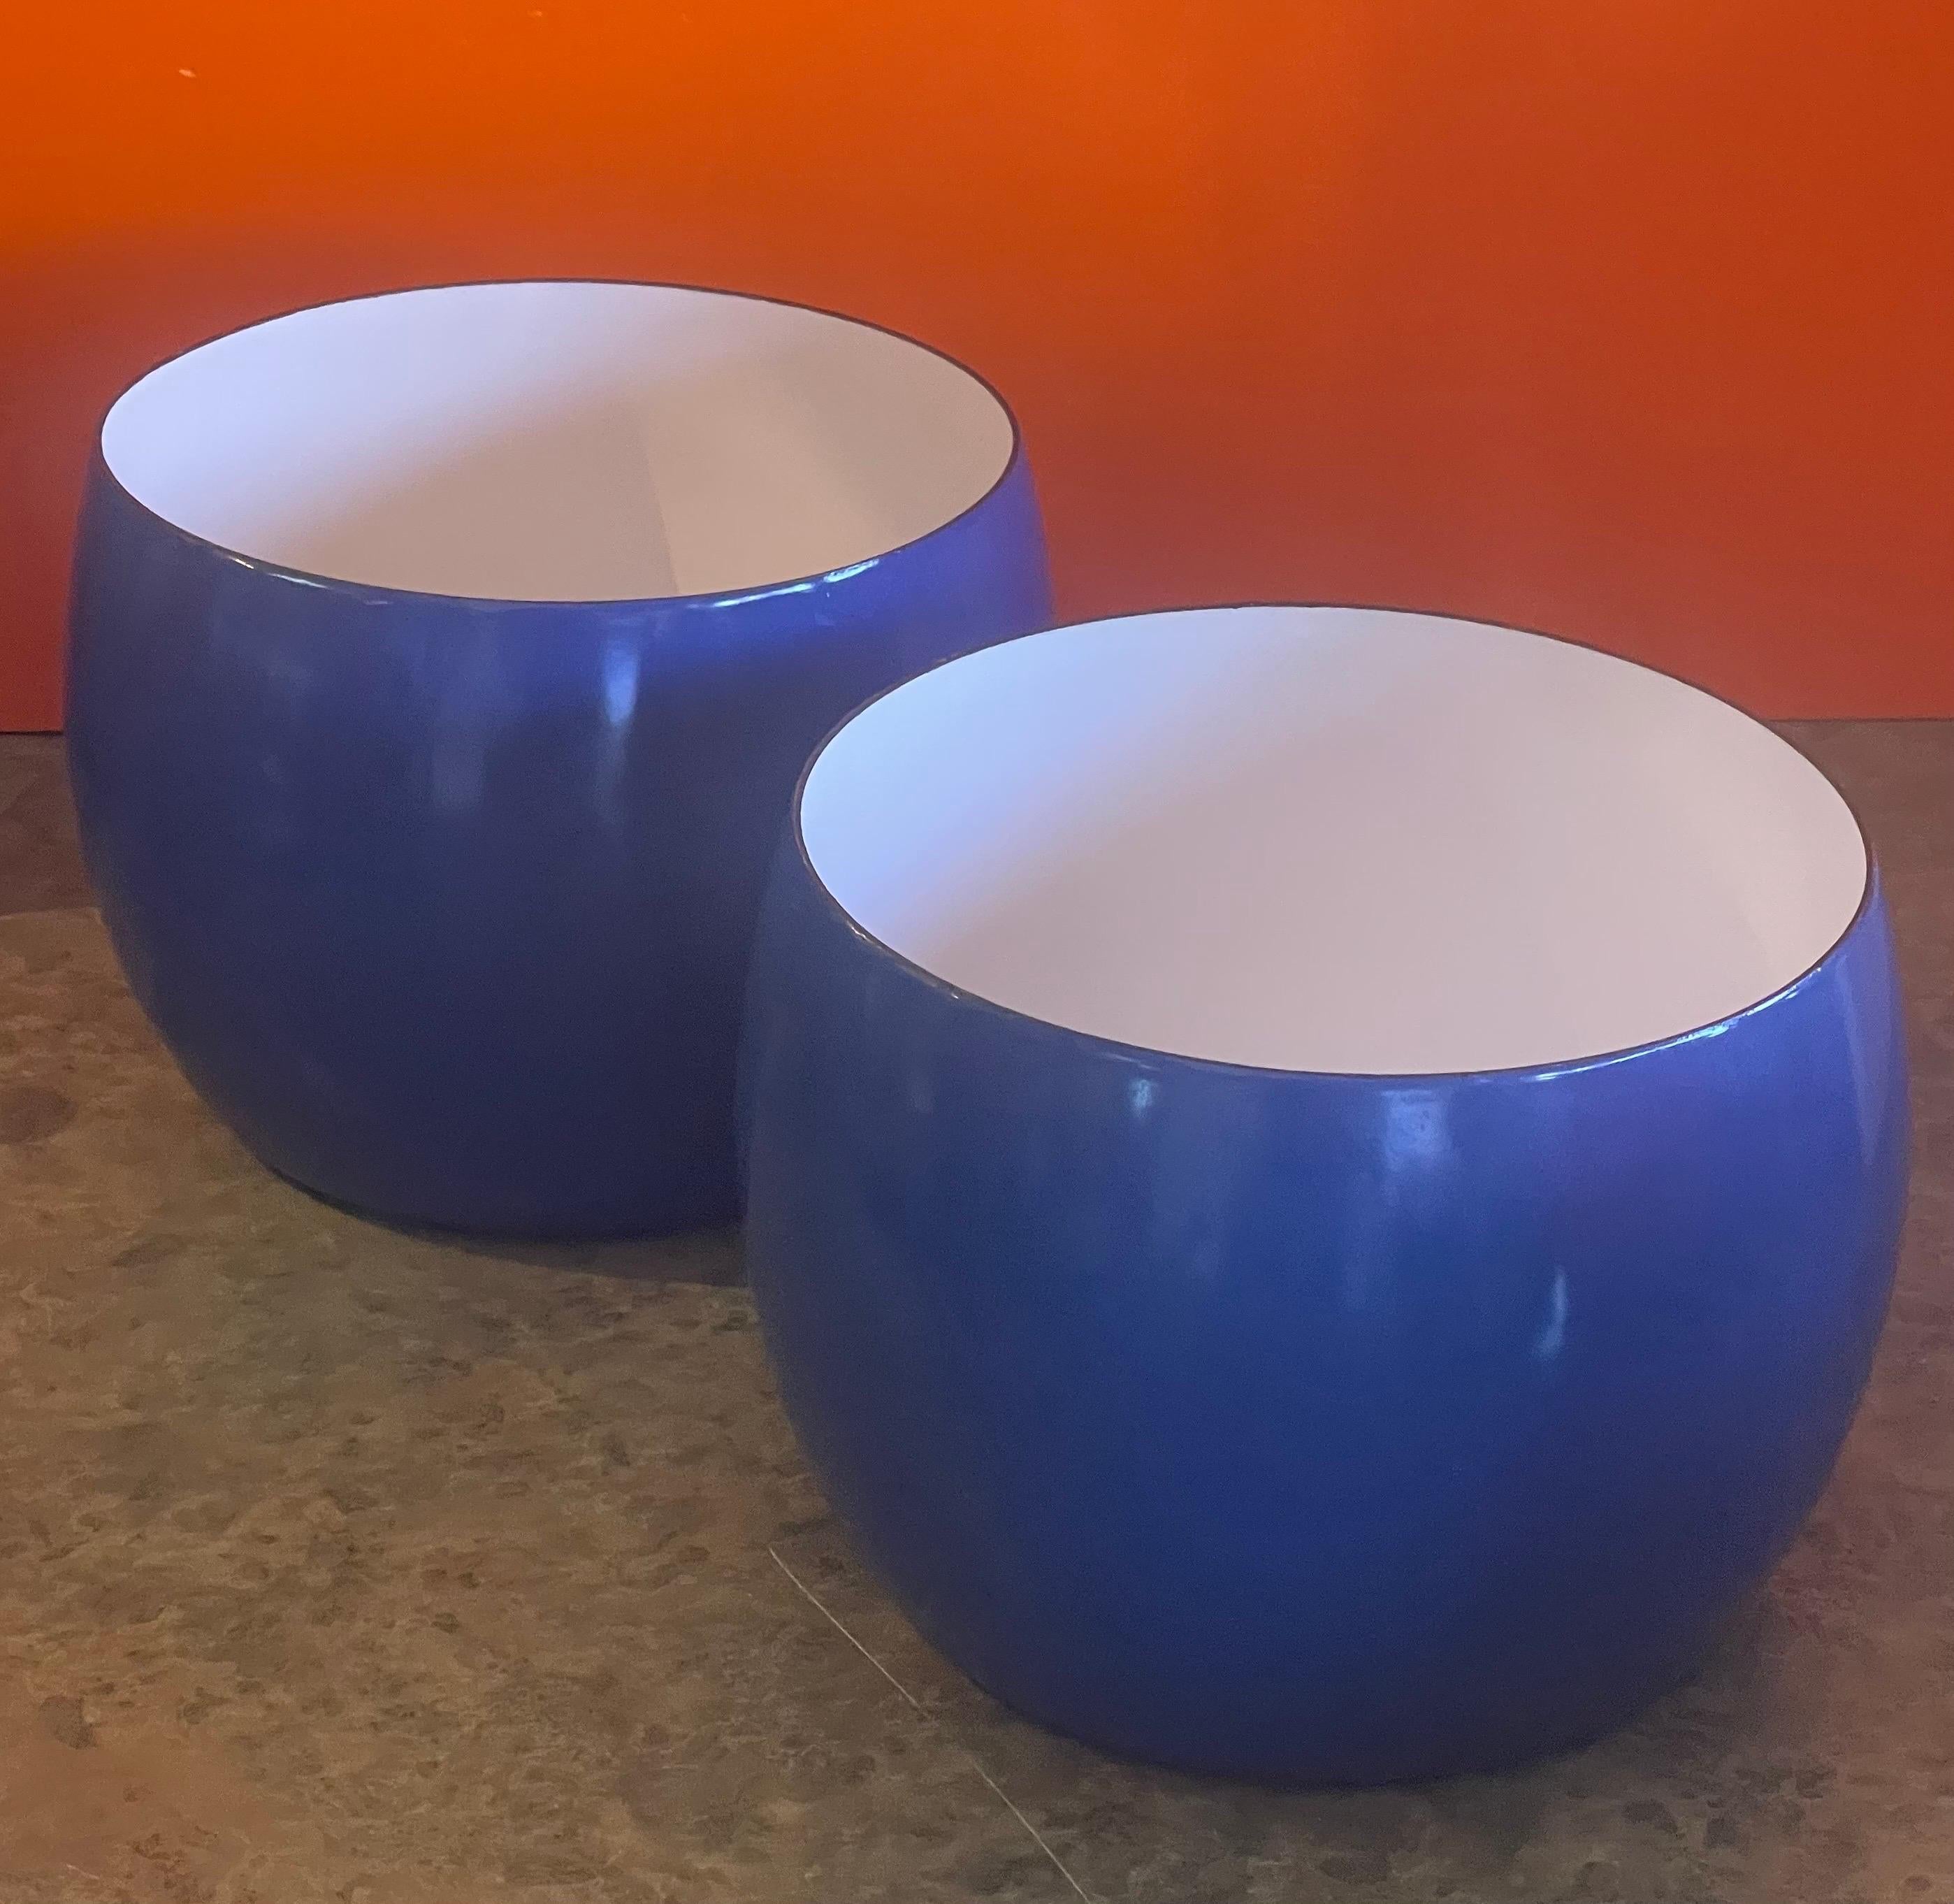 Pair of Danish Modern Blue & White Enamel Bowl by Jens Quistgaard for Dansk For Sale 8